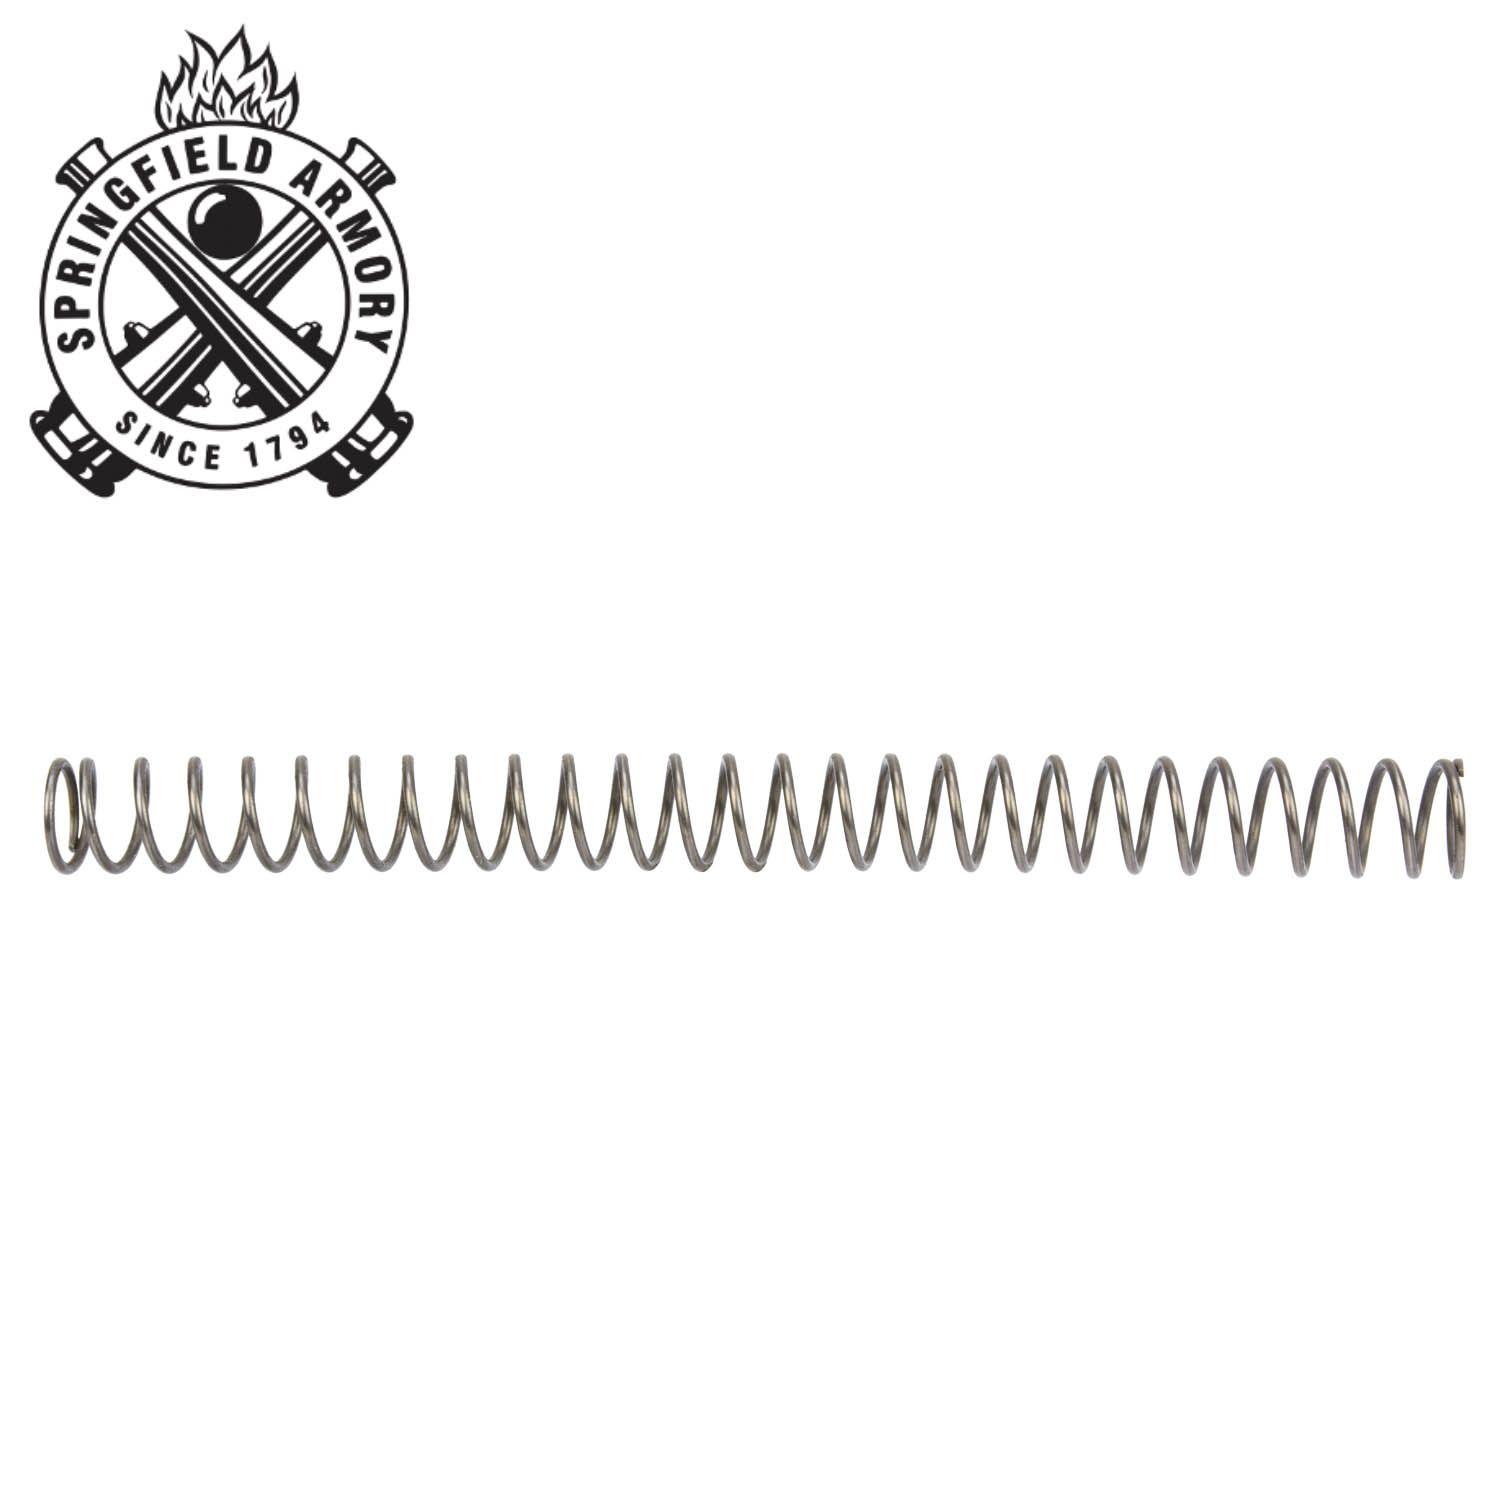 XDM Logo - Springfield XDM 5.25